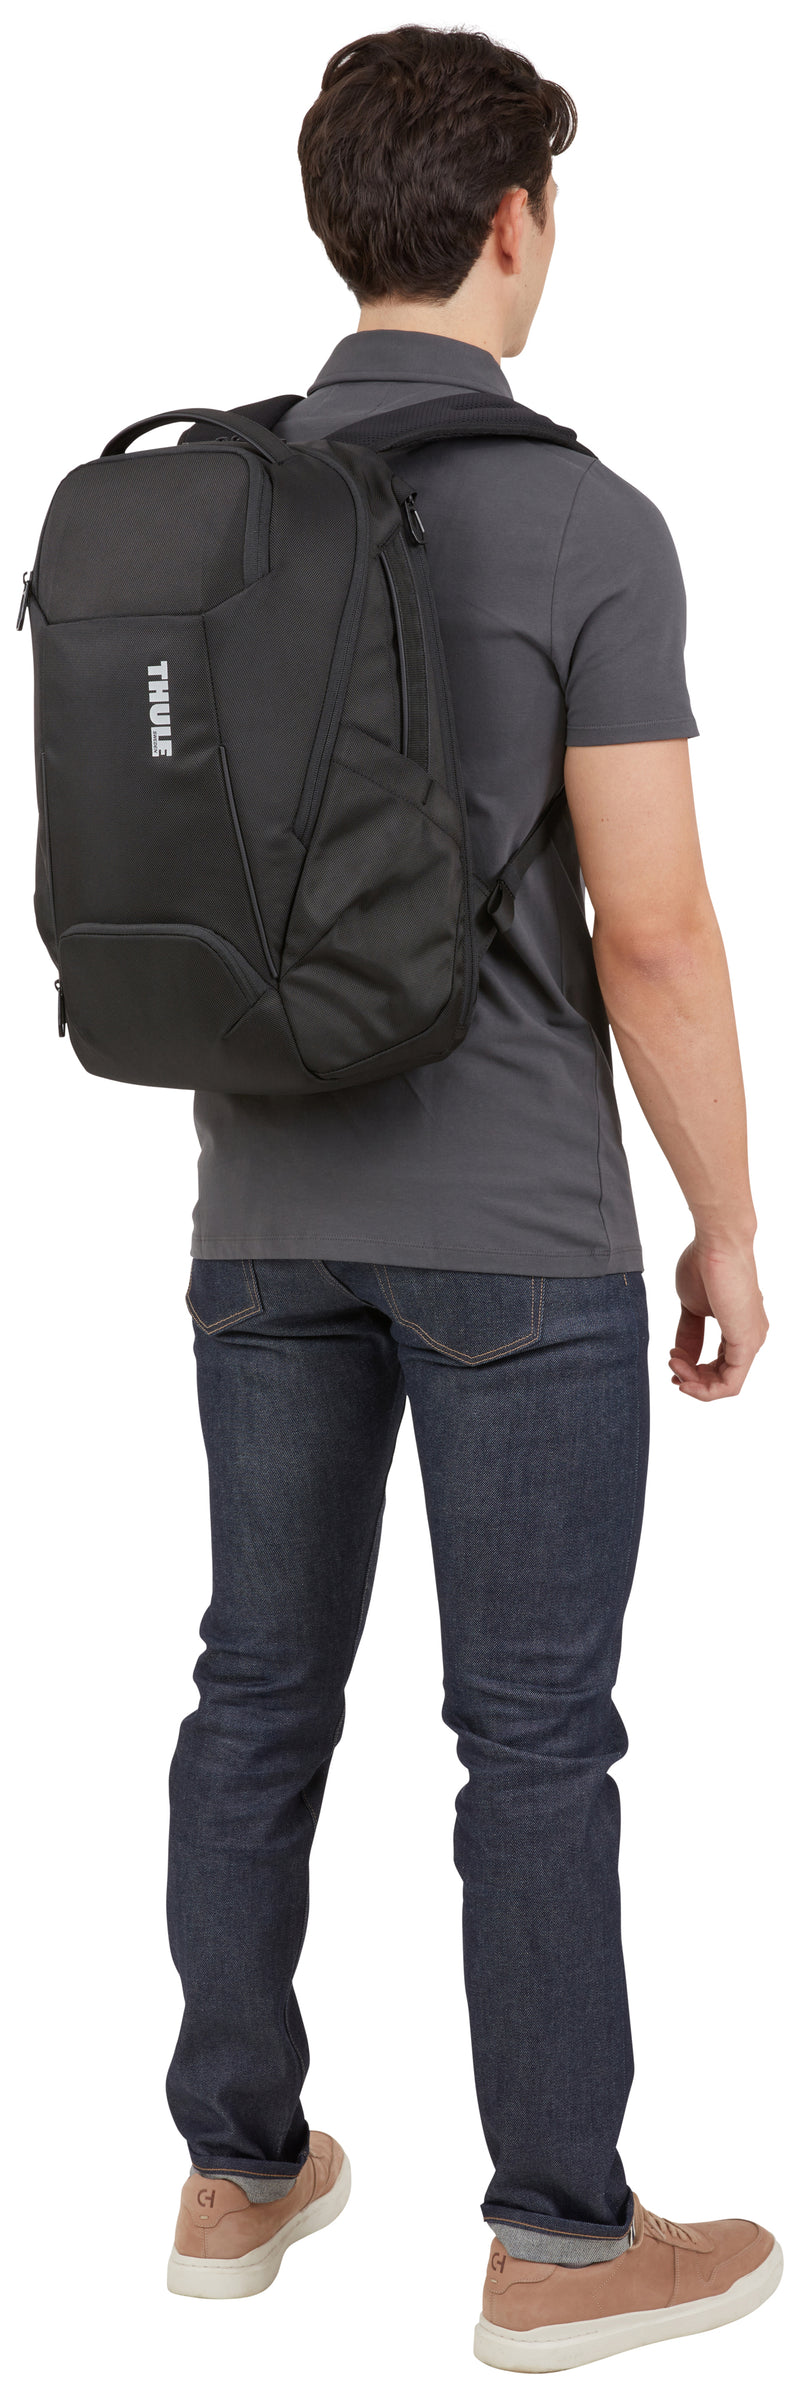 Thule 4816 Accent Backpack 26L TACBP-2316 Black